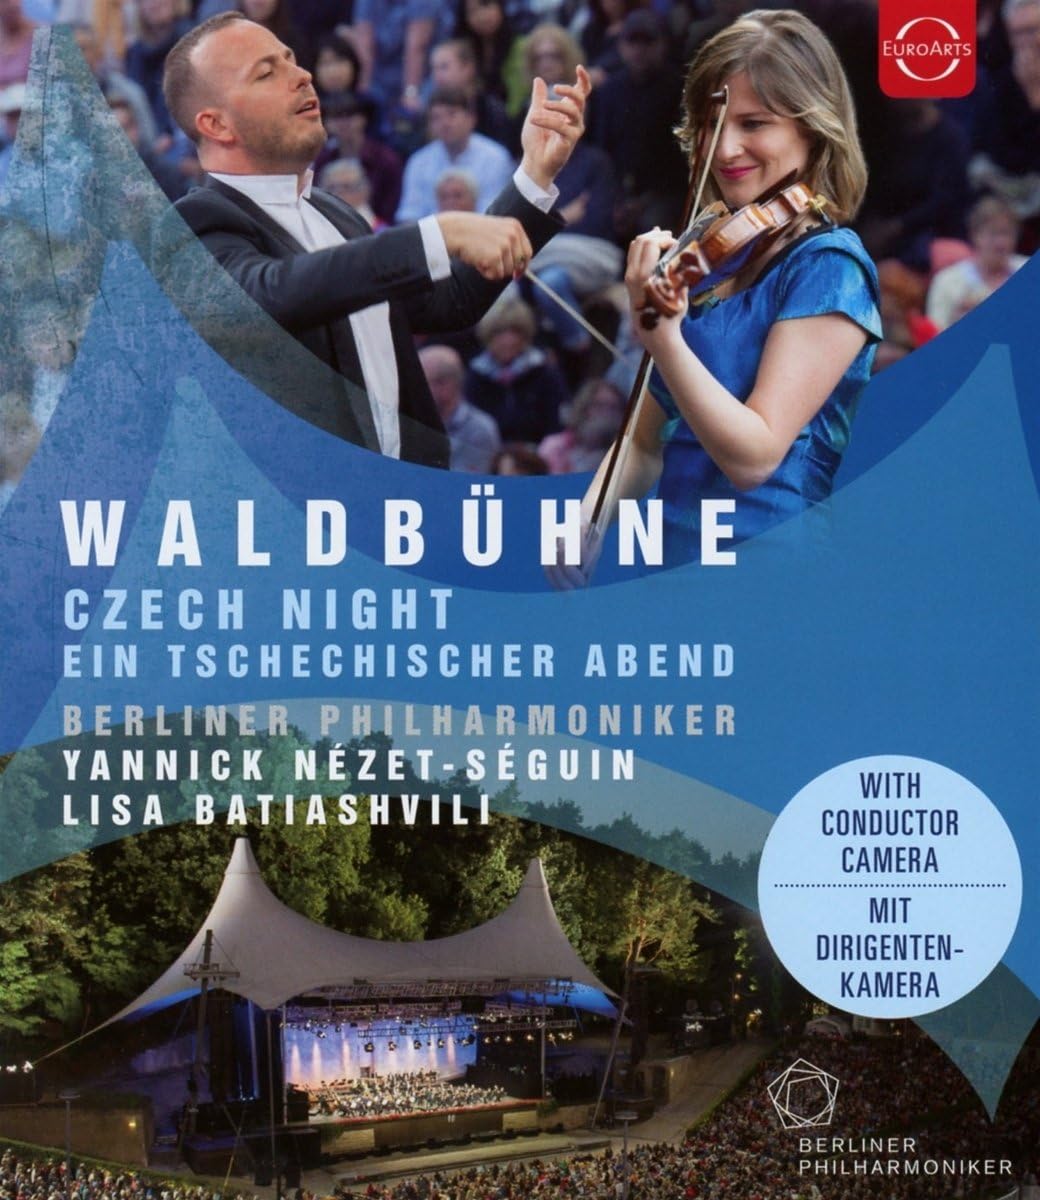 Waldbuhne Czech Night (Blu-ray) | Berliner Philharmoniker, Yannick Nezet-Seguin, Lisa Batiashvili